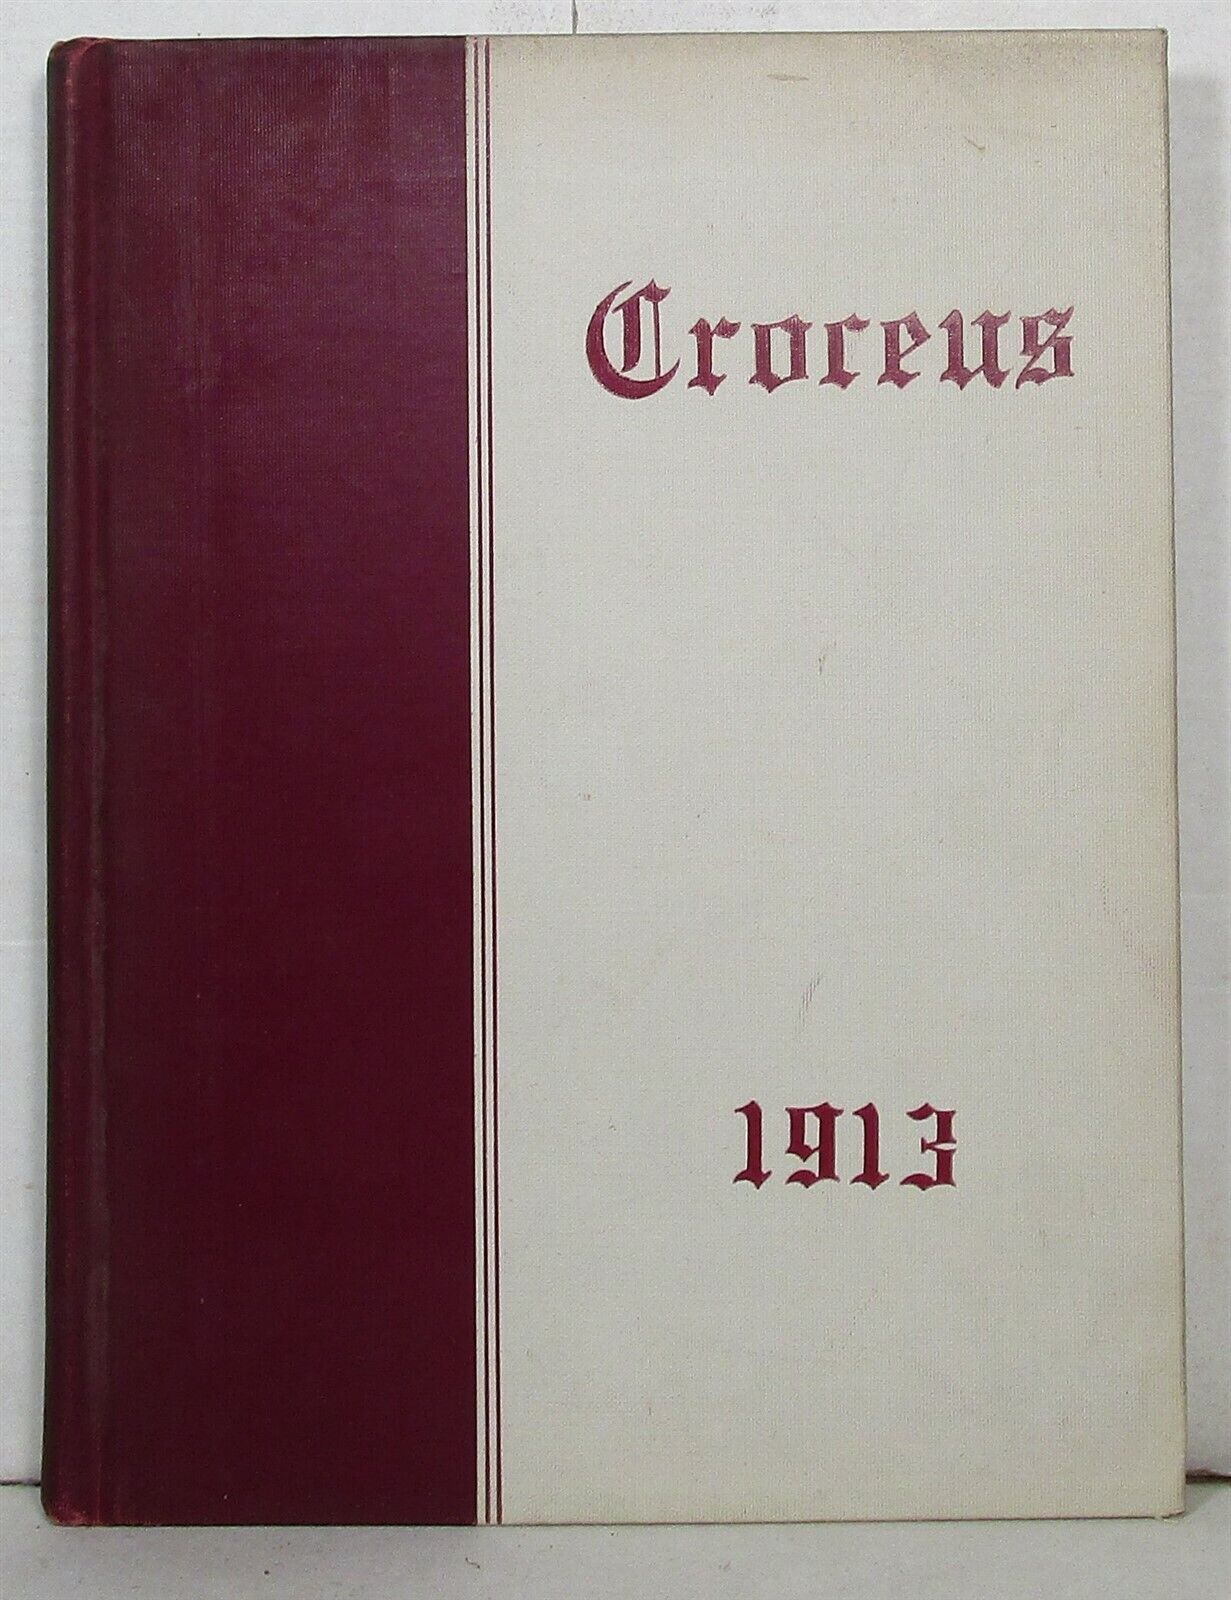 1913 University of Rochester women\'s yearbook The Croceus